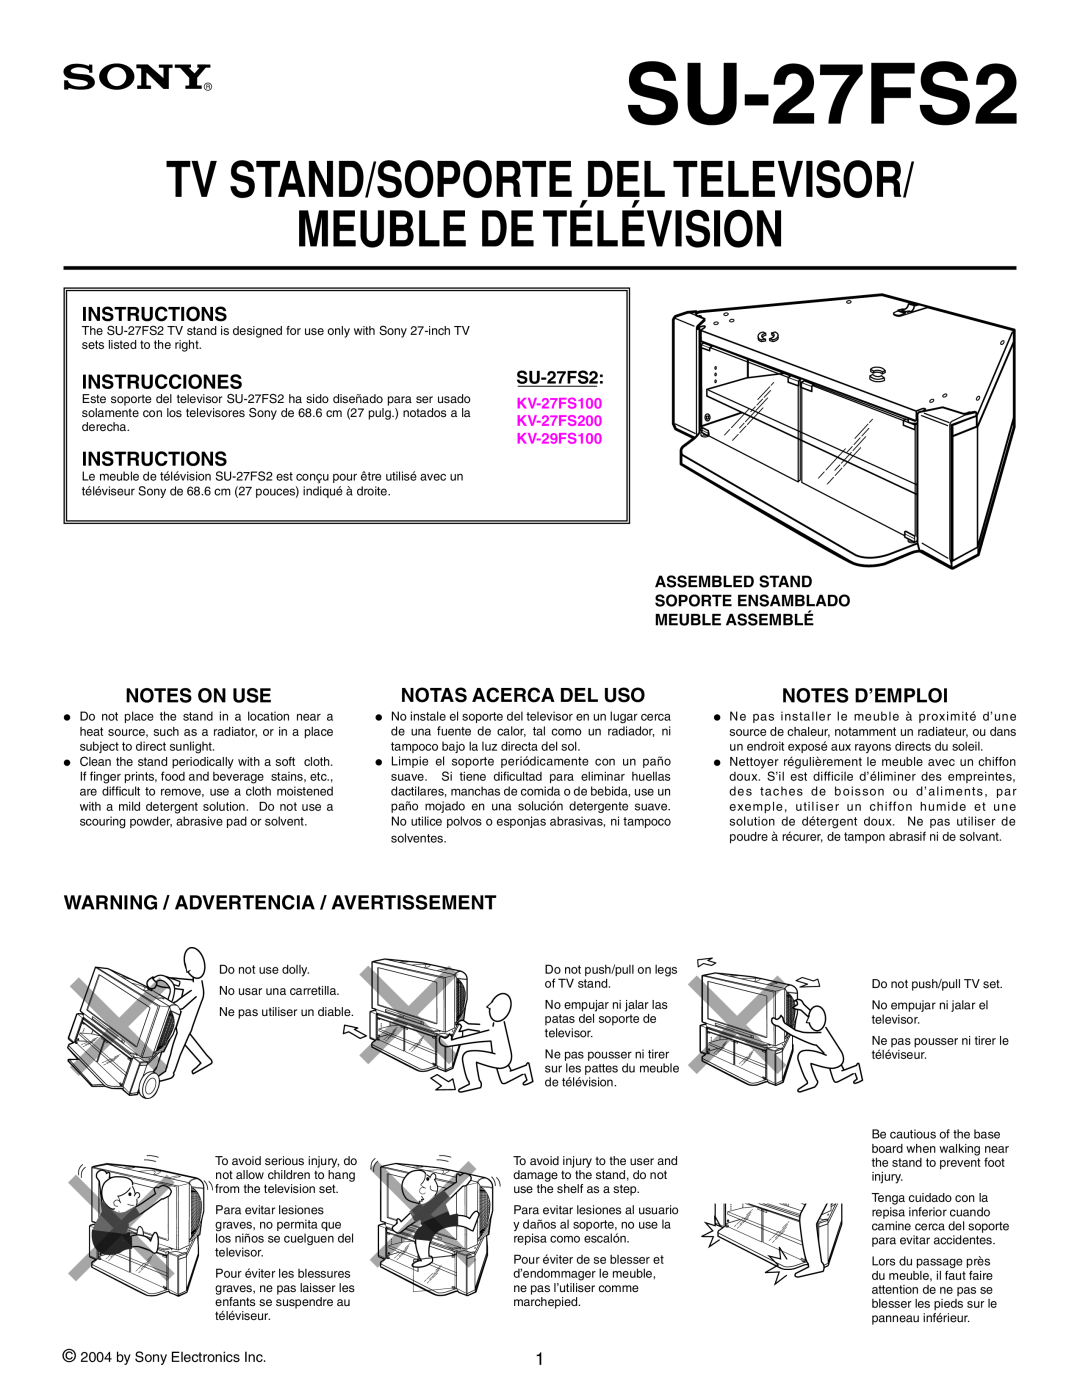 Sony SU-27FS2 manual Meuble De Télévision, Tv Stand/Soporte Del Televisor, Instructions, Instrucciones, Notes On Use 